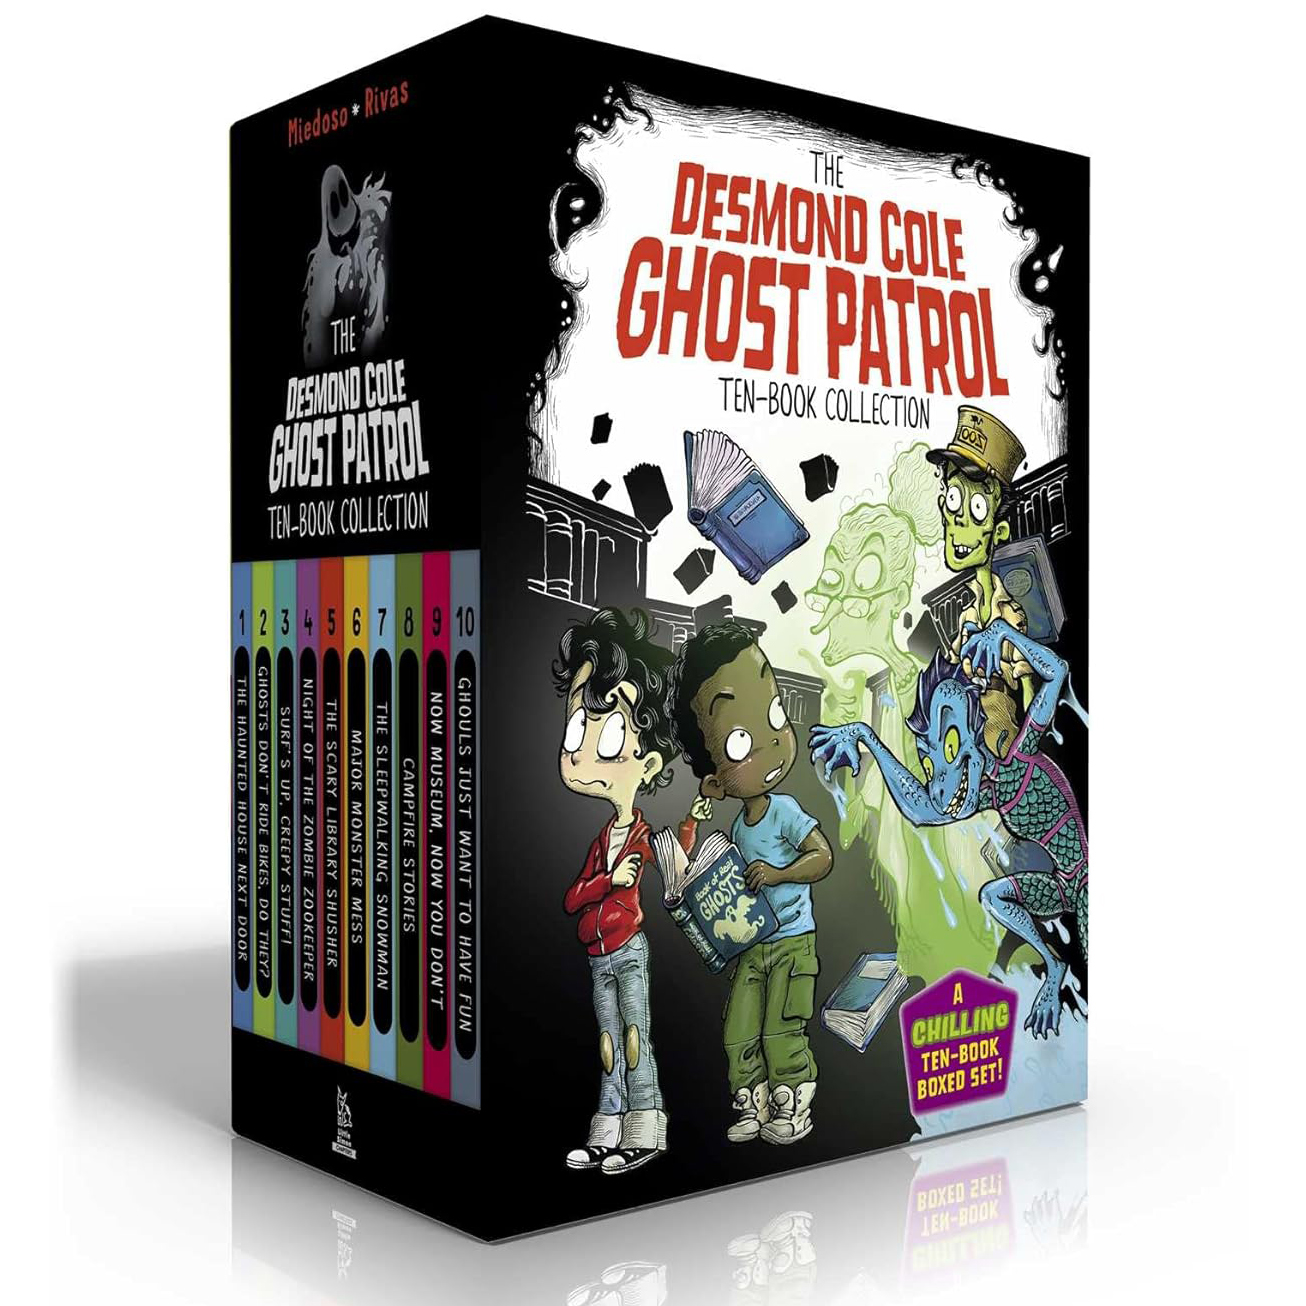 Desmond Cole Ghost Patrol Book set